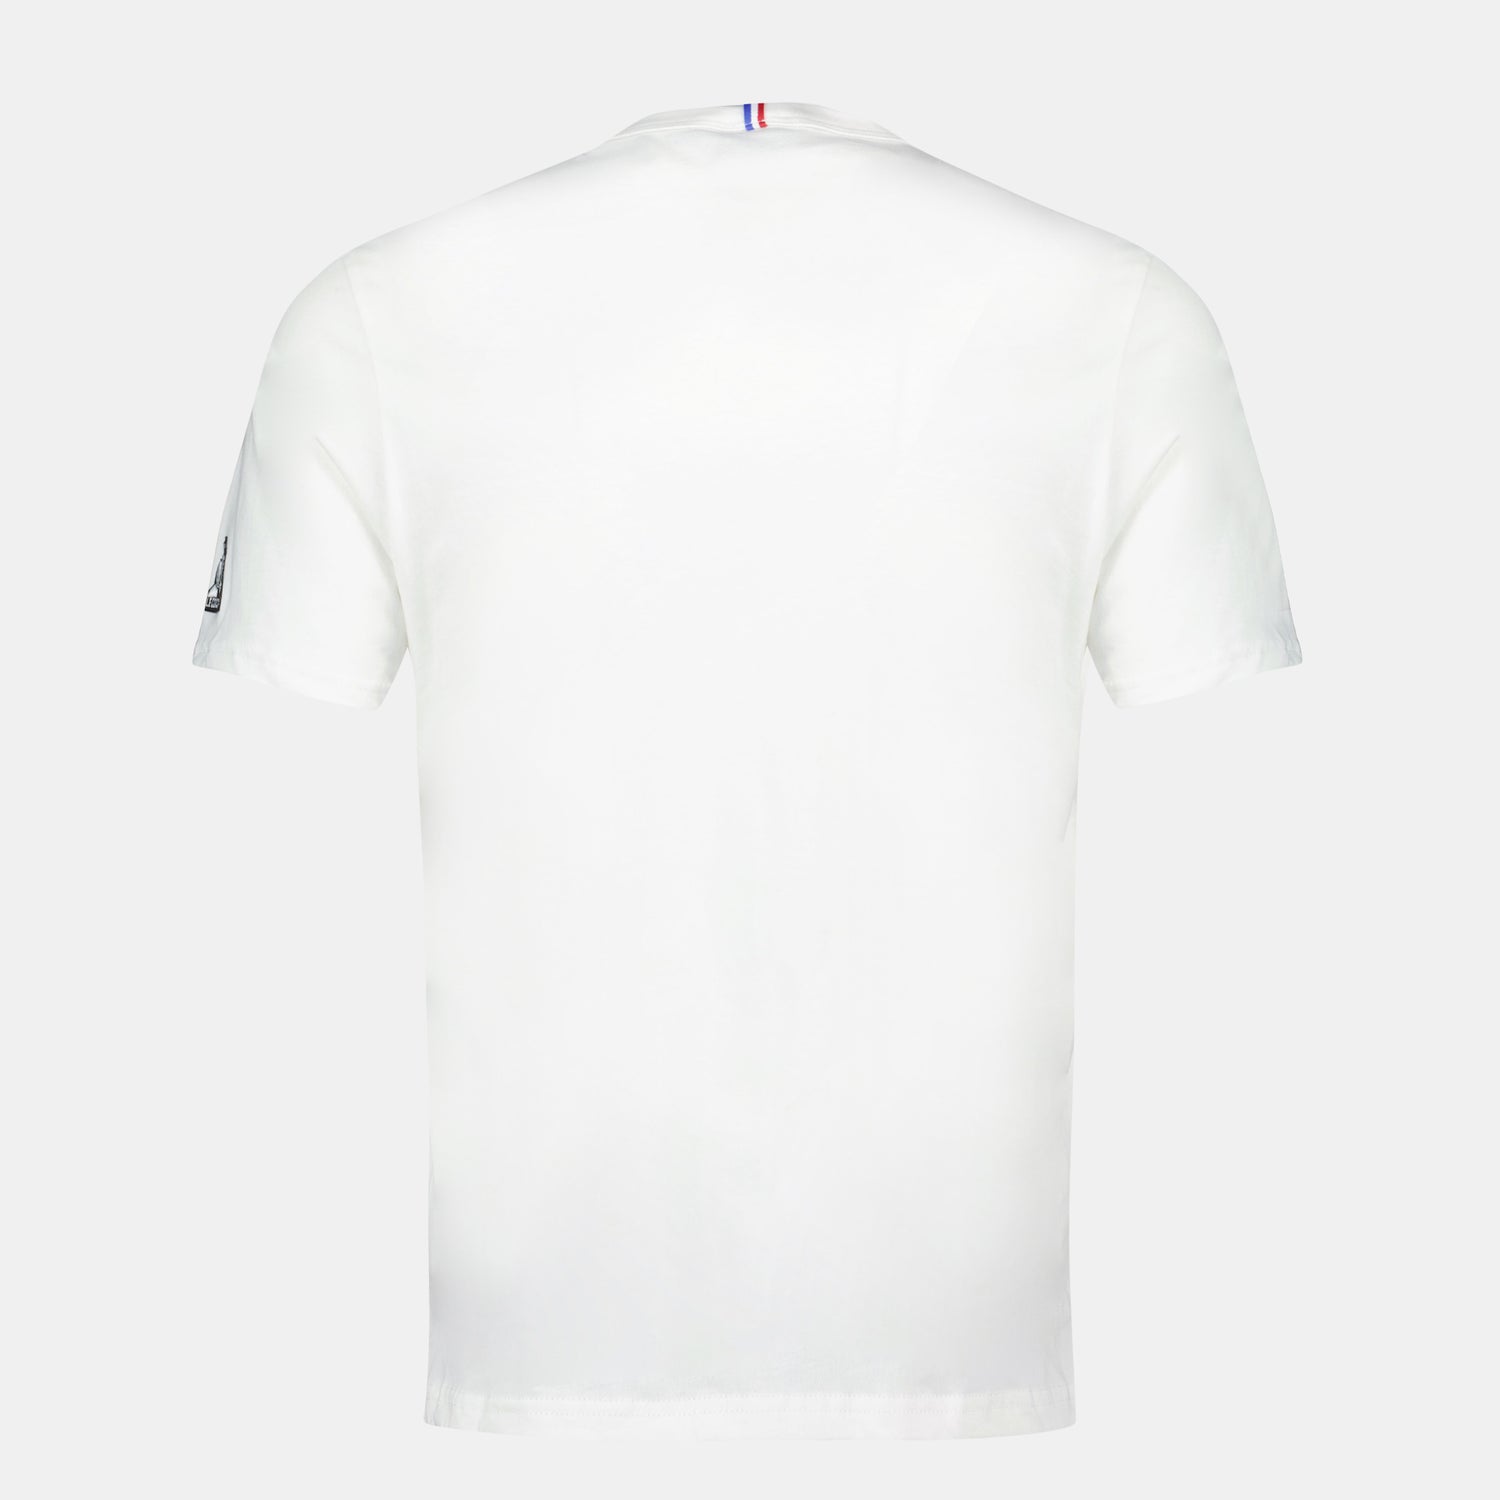 2410193-SAISON 2 Tee SS N°1 M new optical white | T-shirt Unisexe